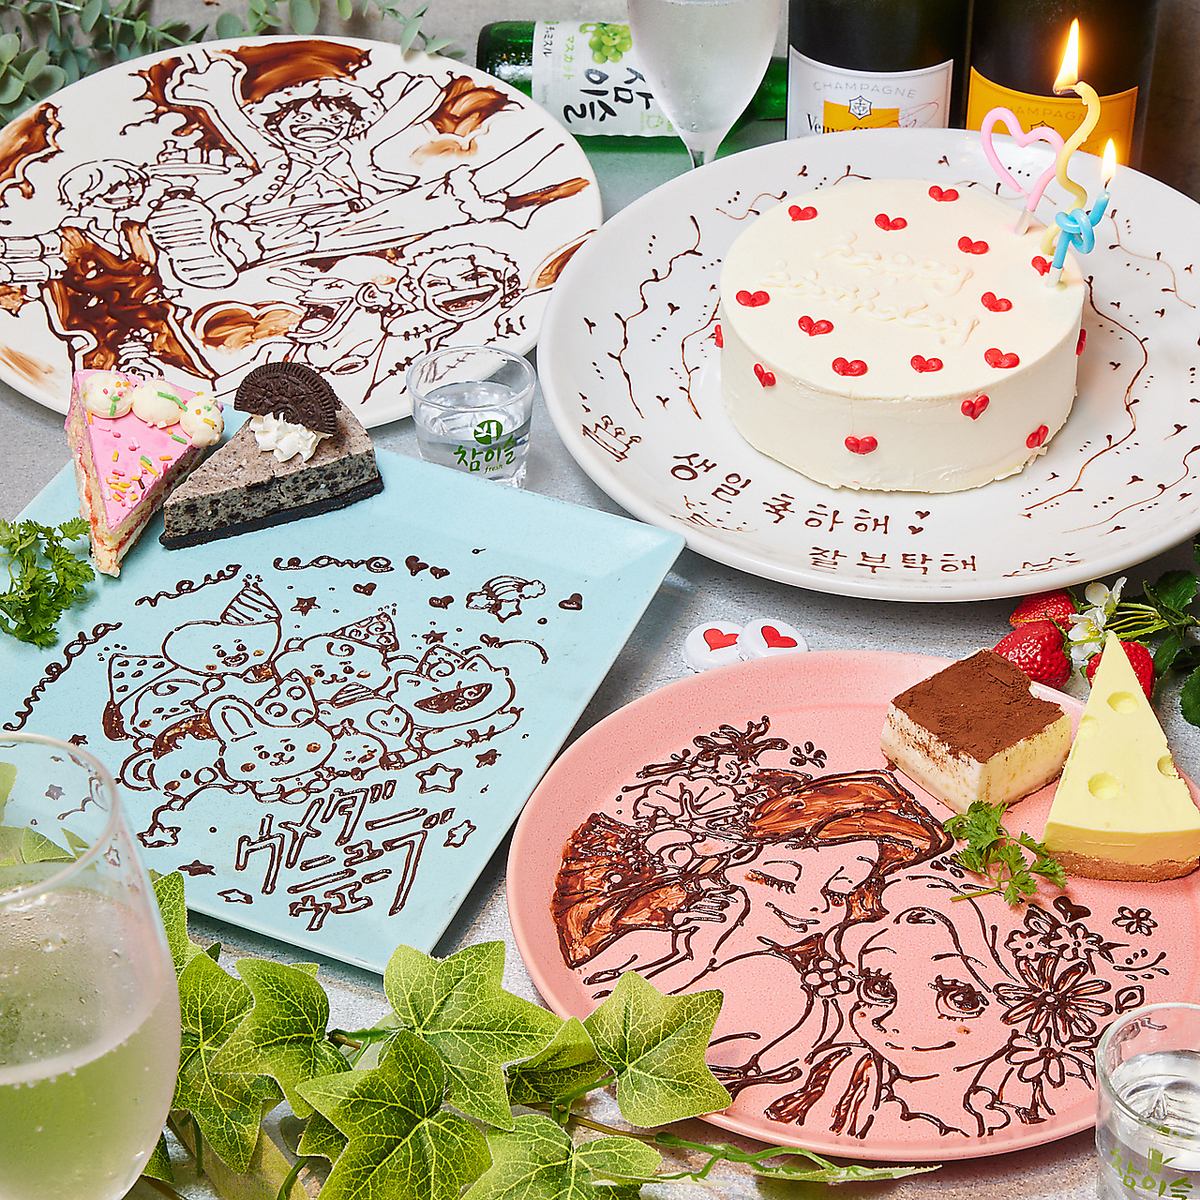 For birthday/surprise reservations, get an original dessert plate for 1,500 yen♪